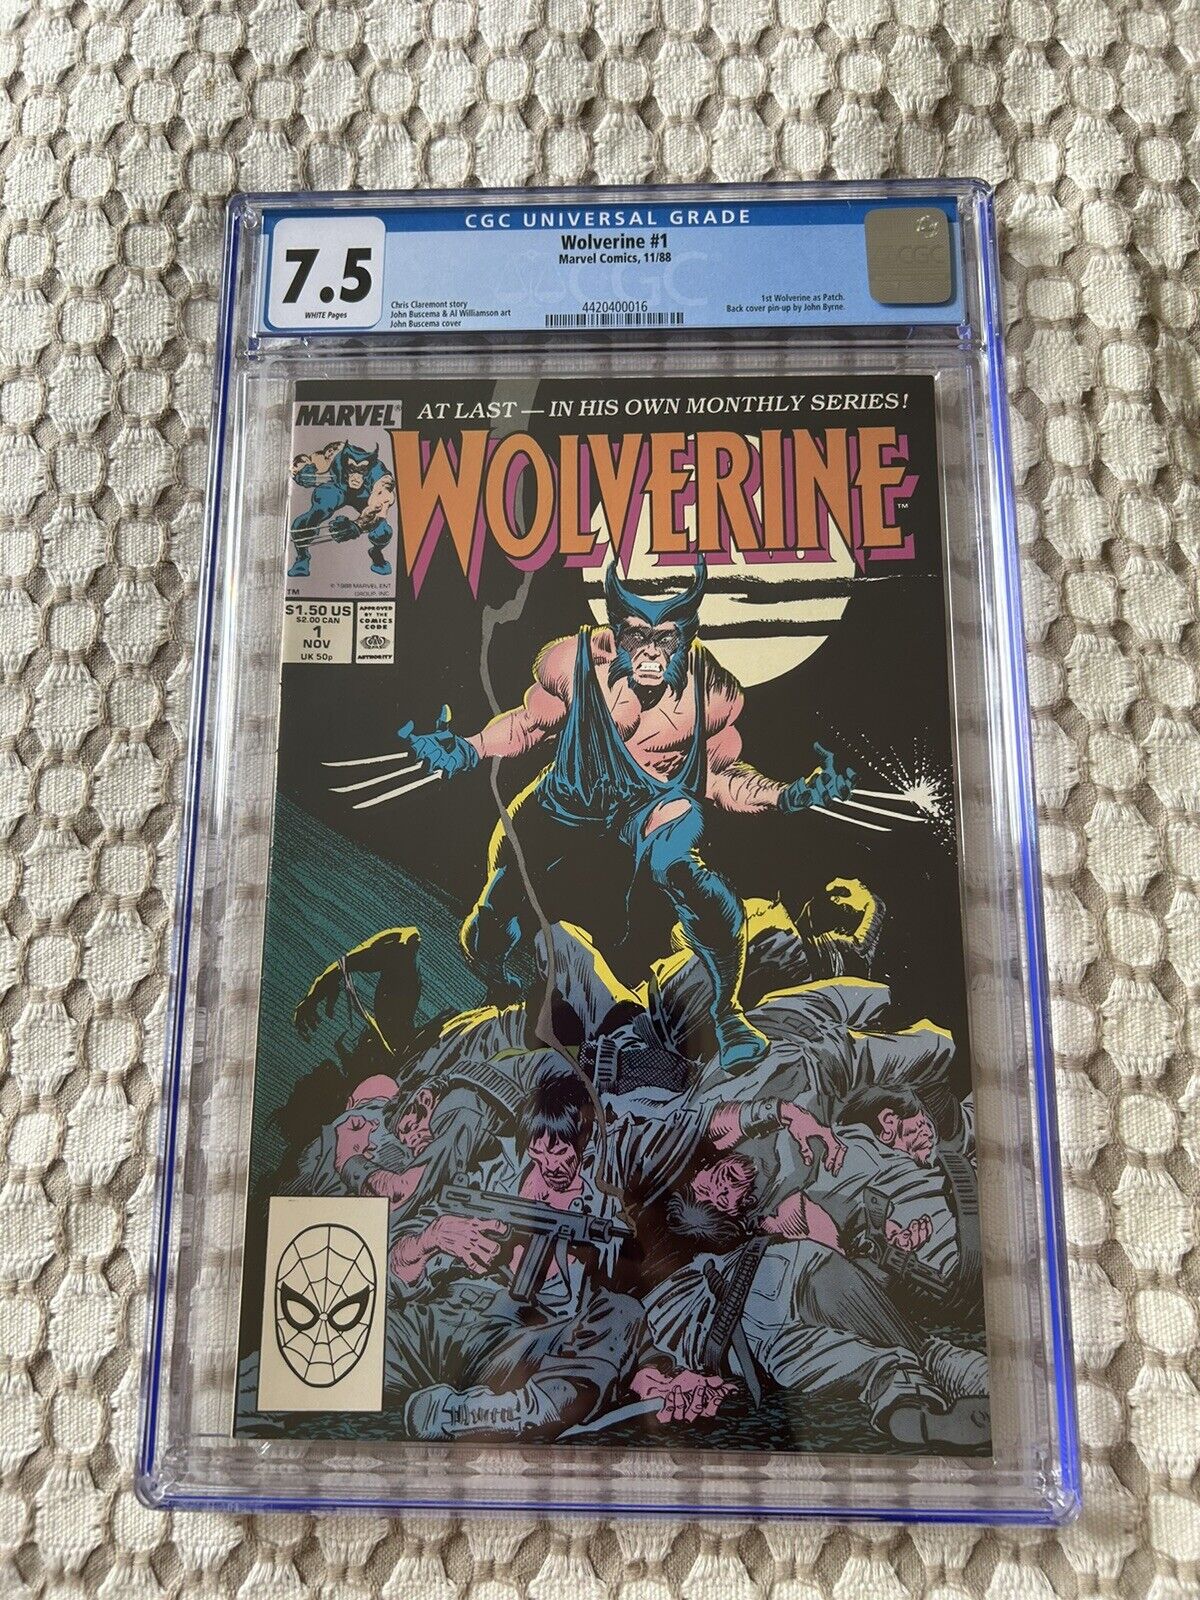 Wolverine #1 CGC 7.5 (Marvel Comics November 1988)